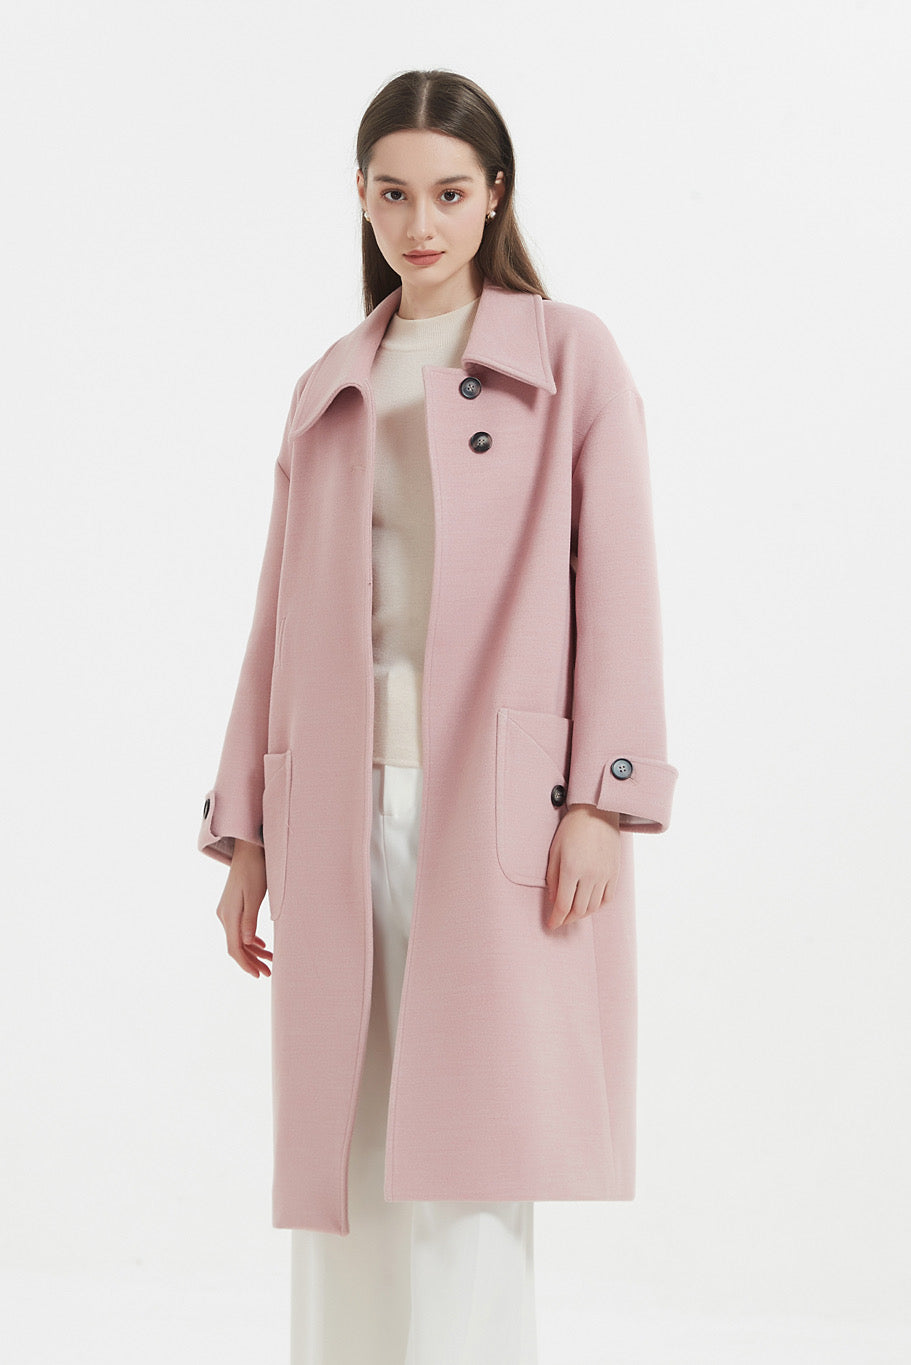 SKYE Shop Chic Modern Elegant Timeless Women Clothing French Parisian Minimalist Annabelle Long Wool Coat Pink 8